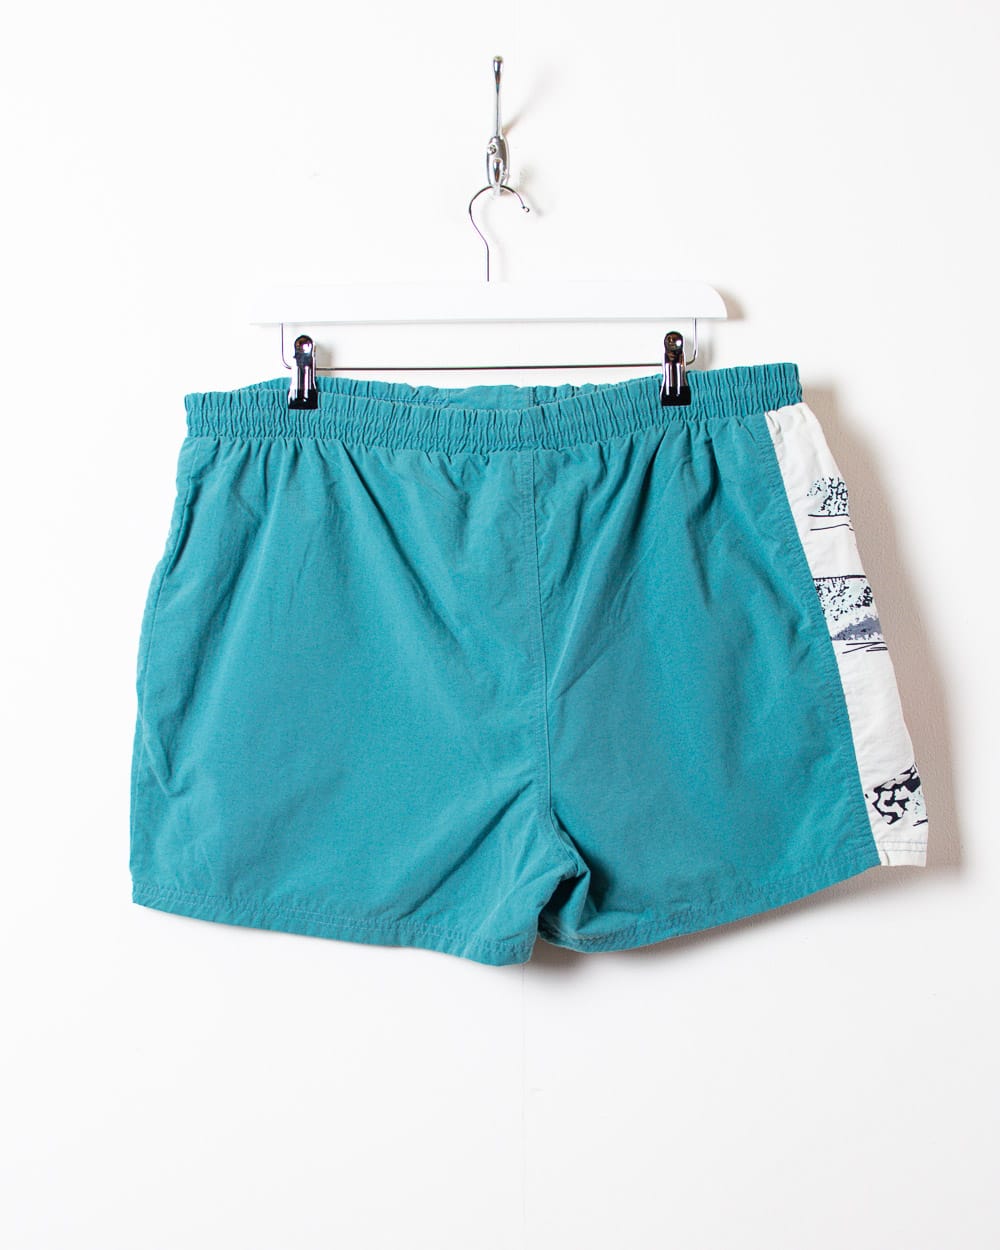 Blue Reebok Shorts - X-Large